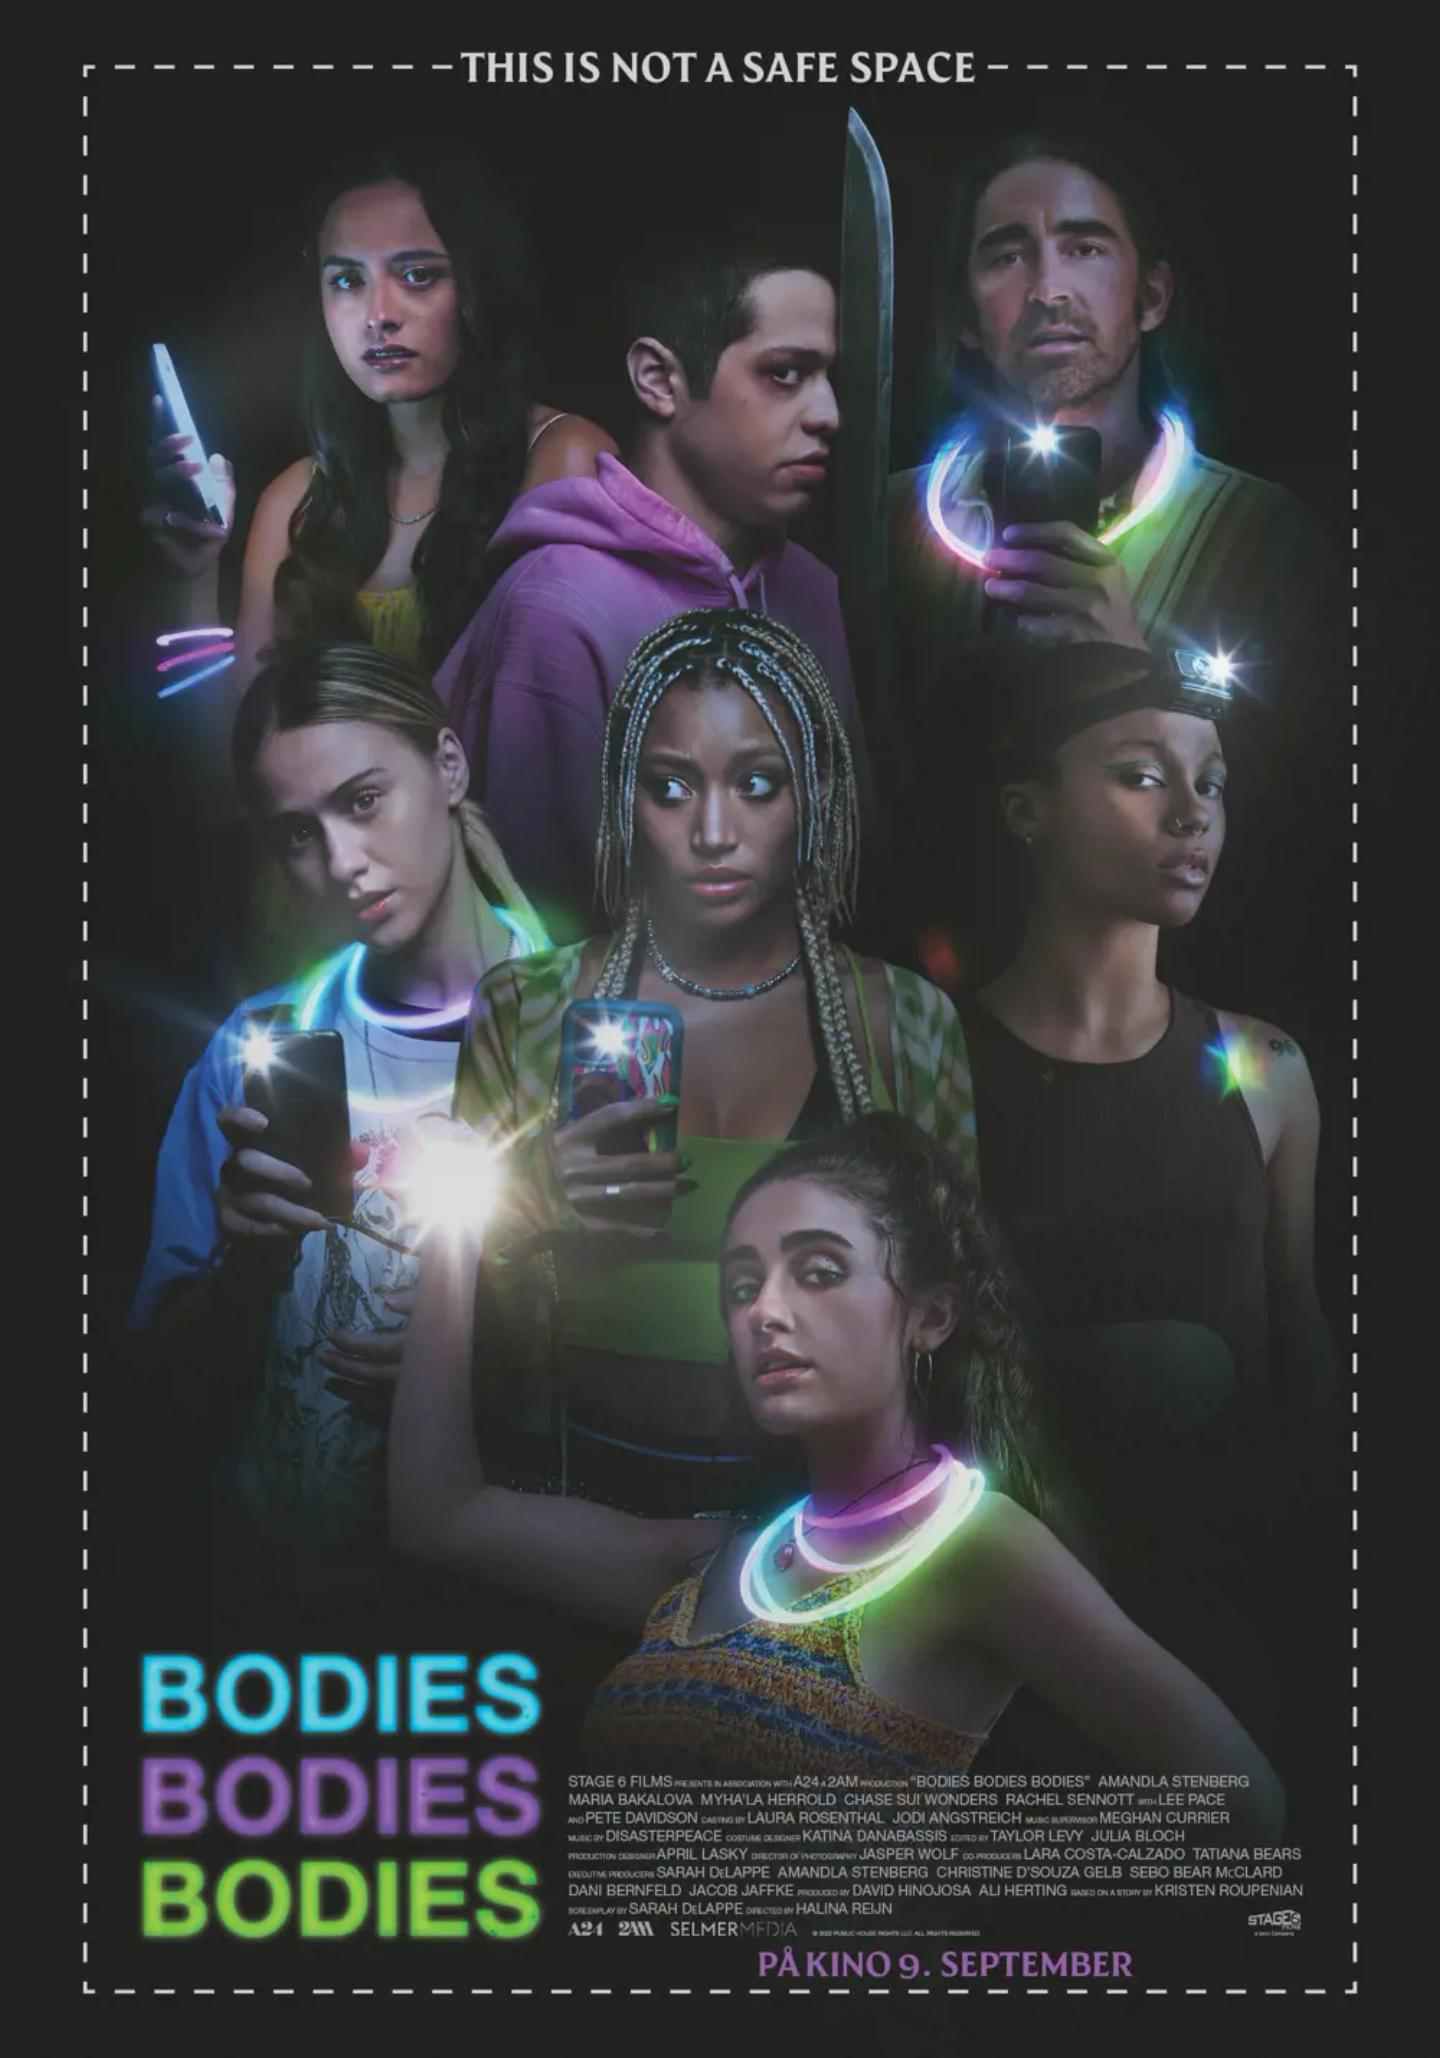 Plakat for 'Bodies Bodies Bodies'